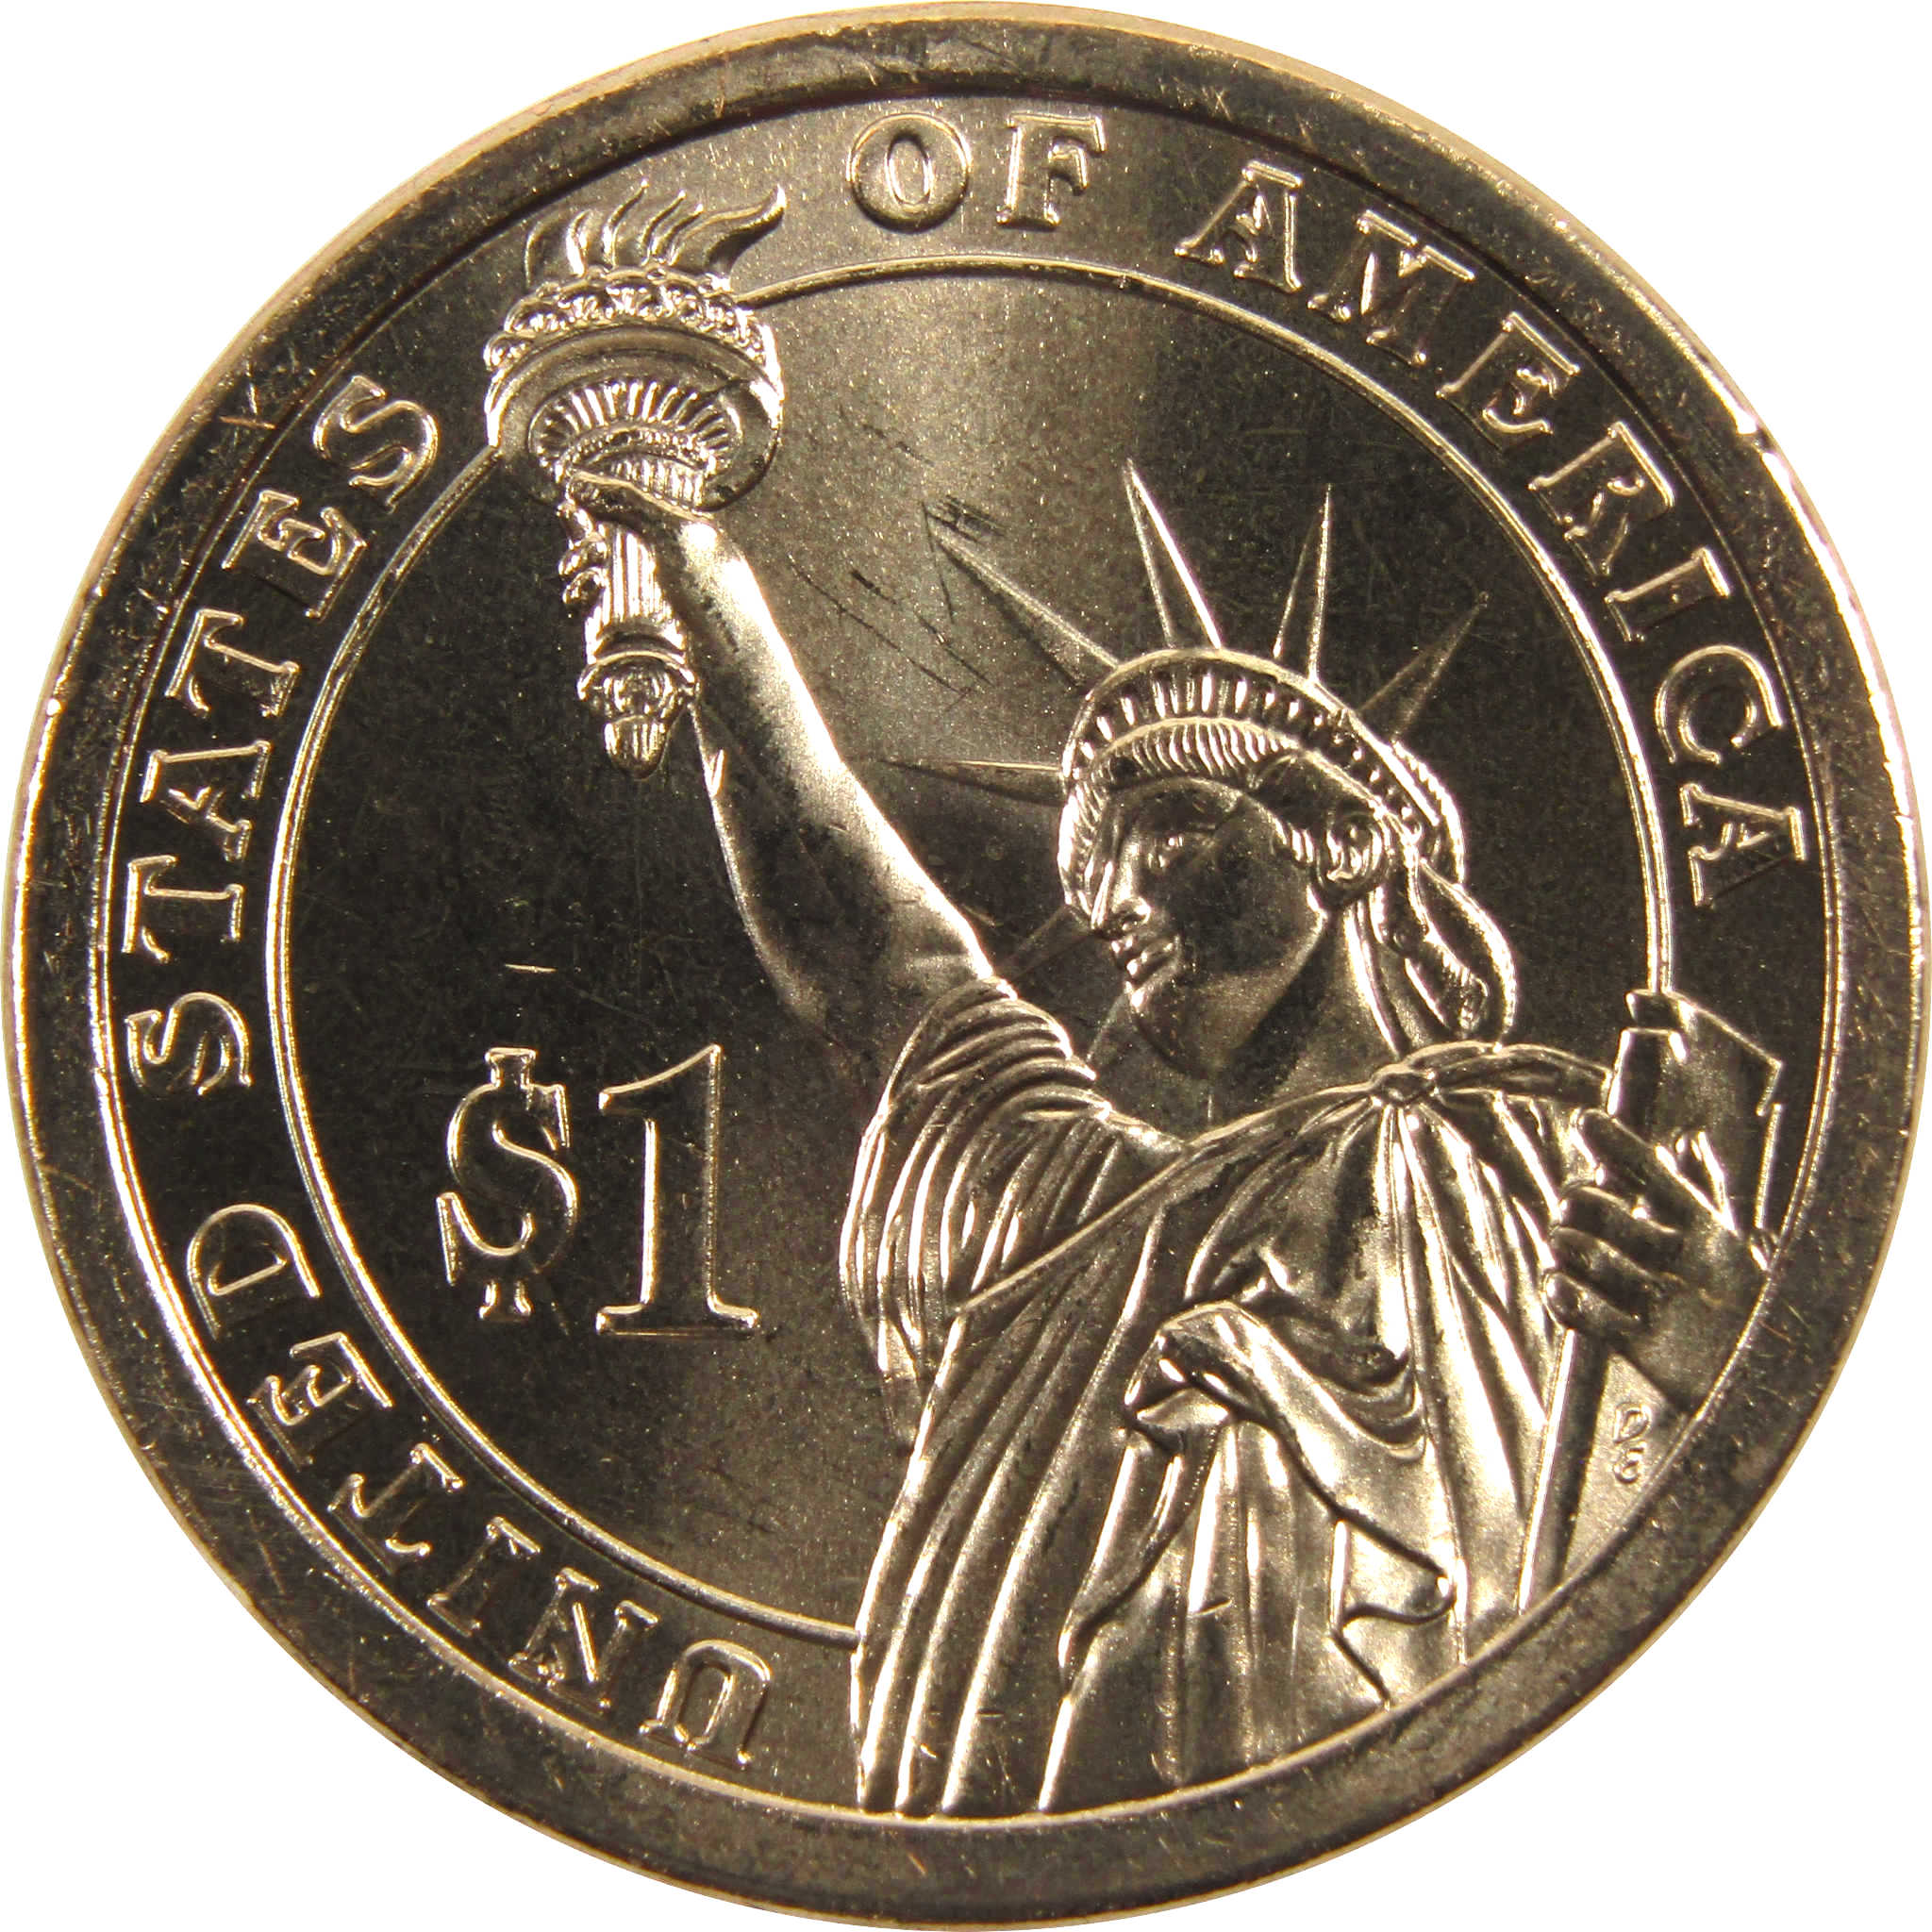 2020 P George H W Bush Presidential Dollar BU Uncirculated $1 Coin